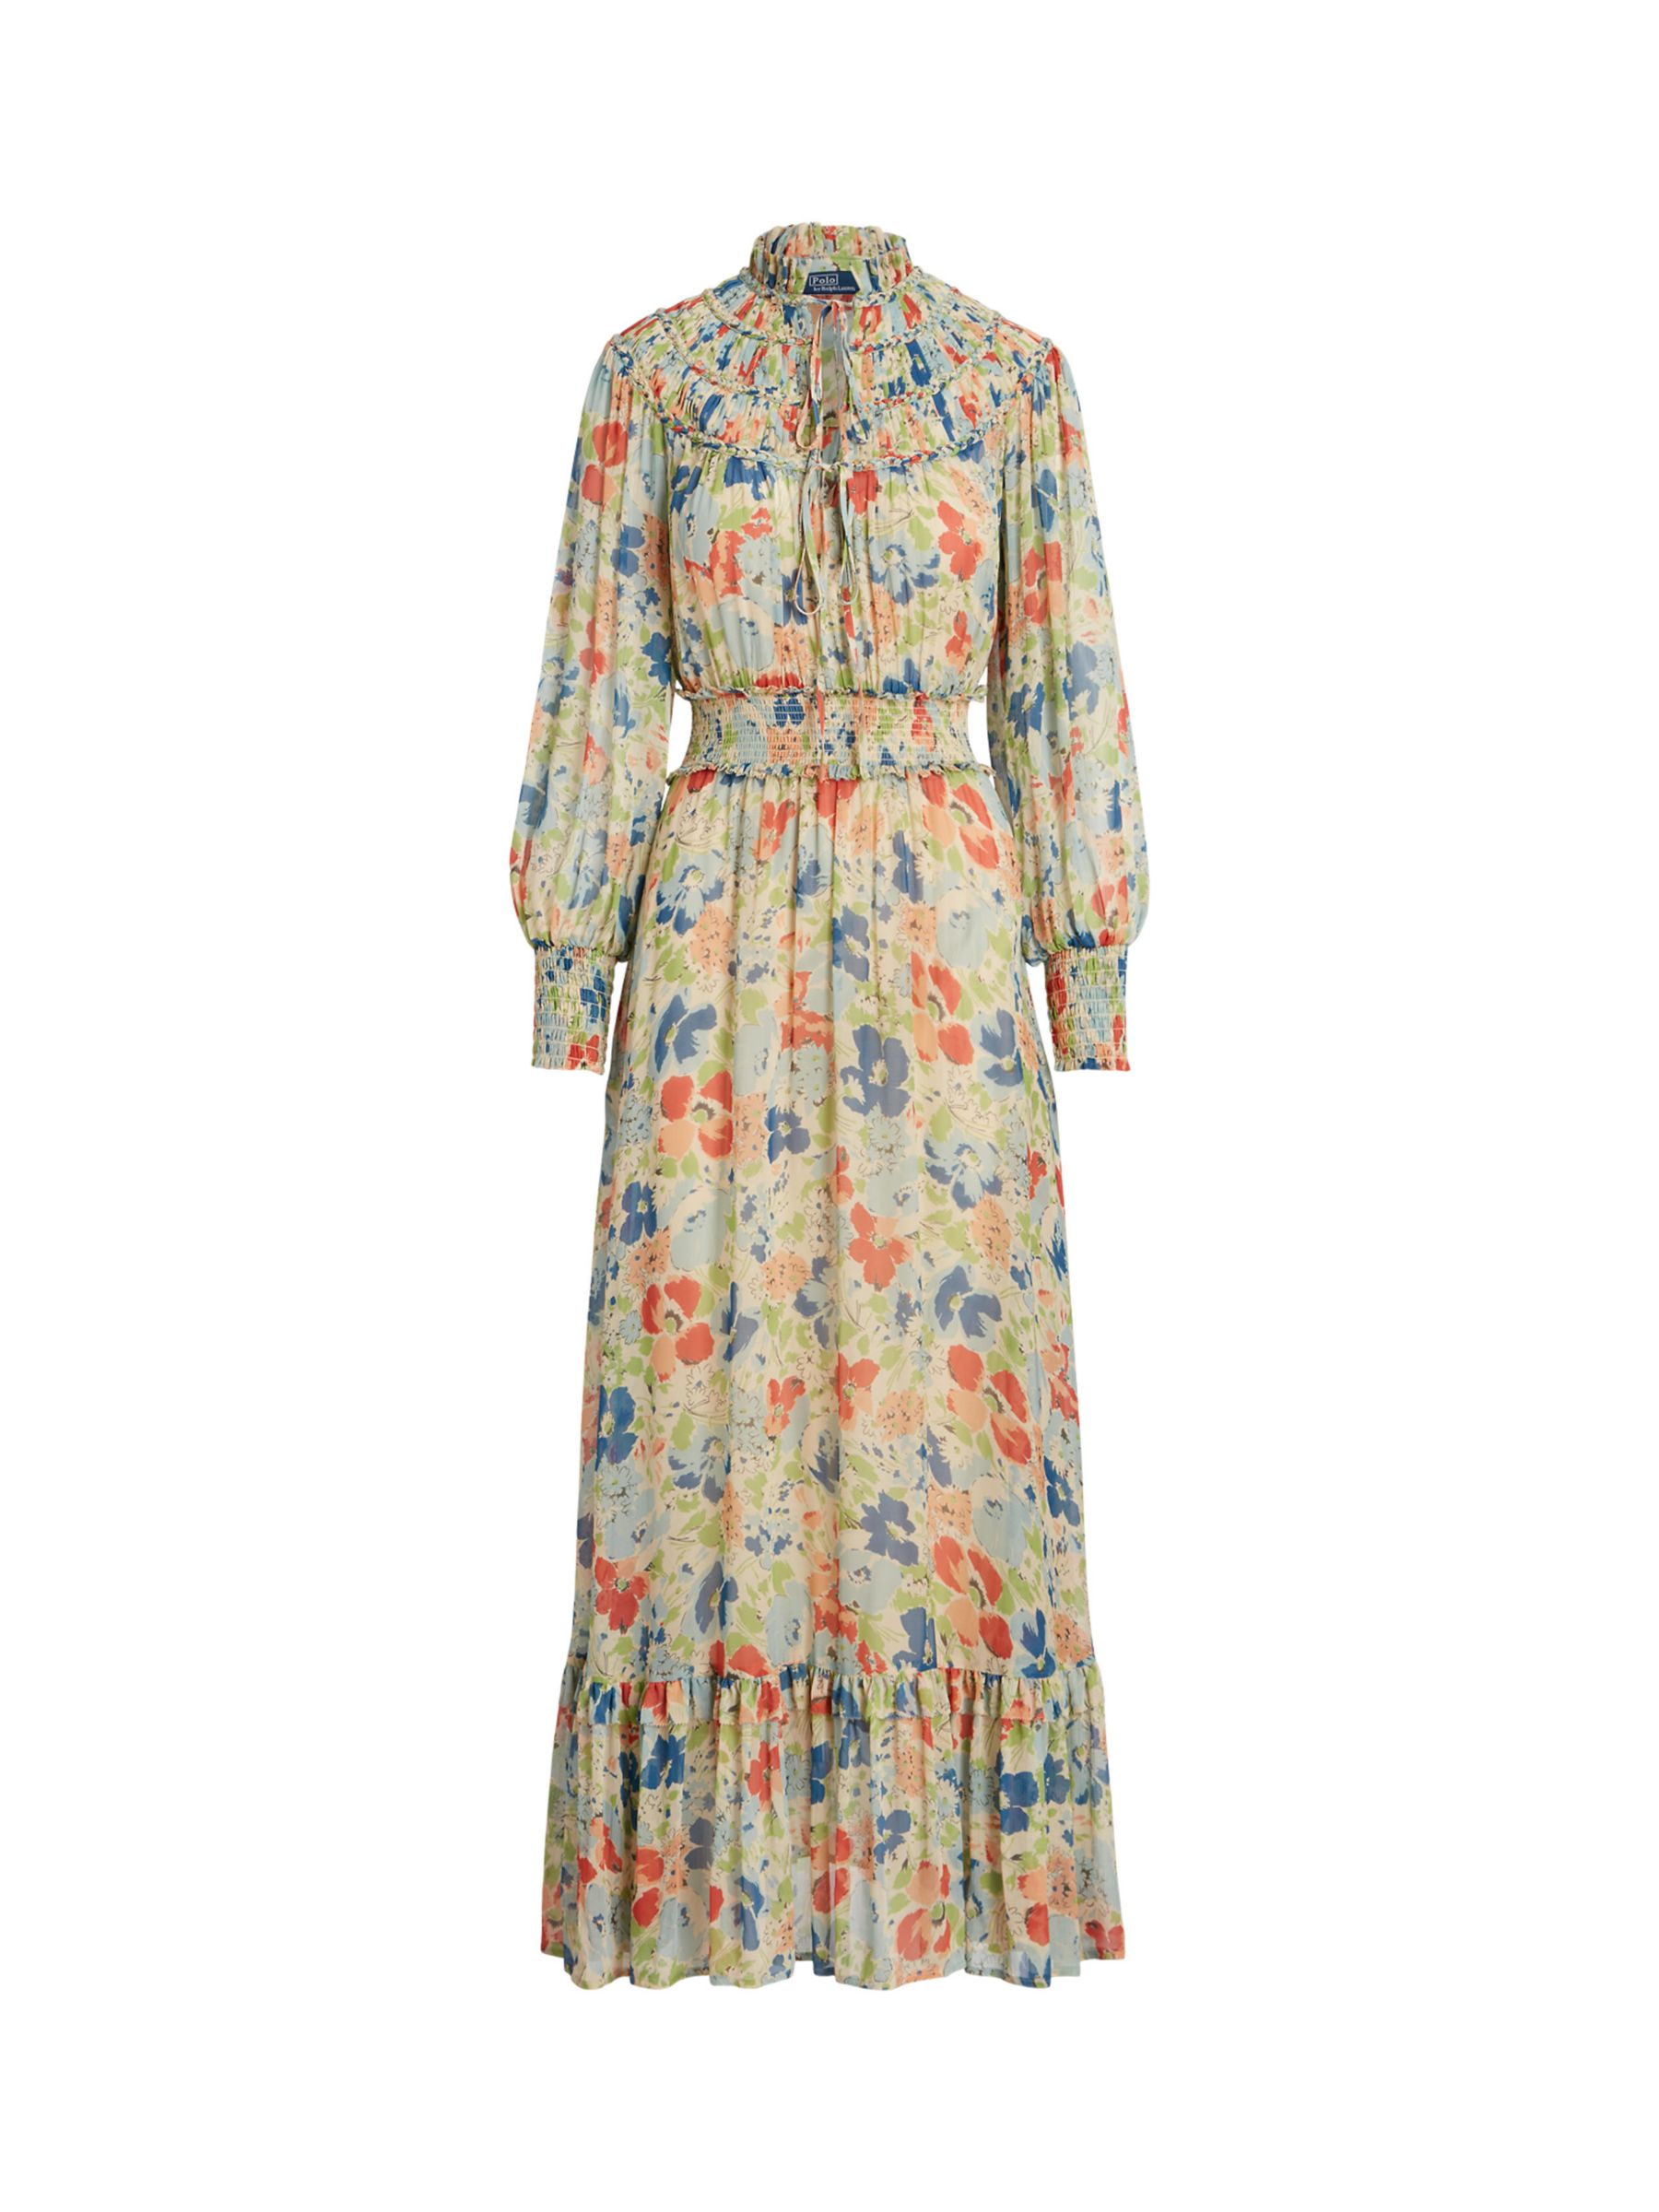 Polo Ralph Lauren Floral Print Blouson Maxi Dress, Multi, 12